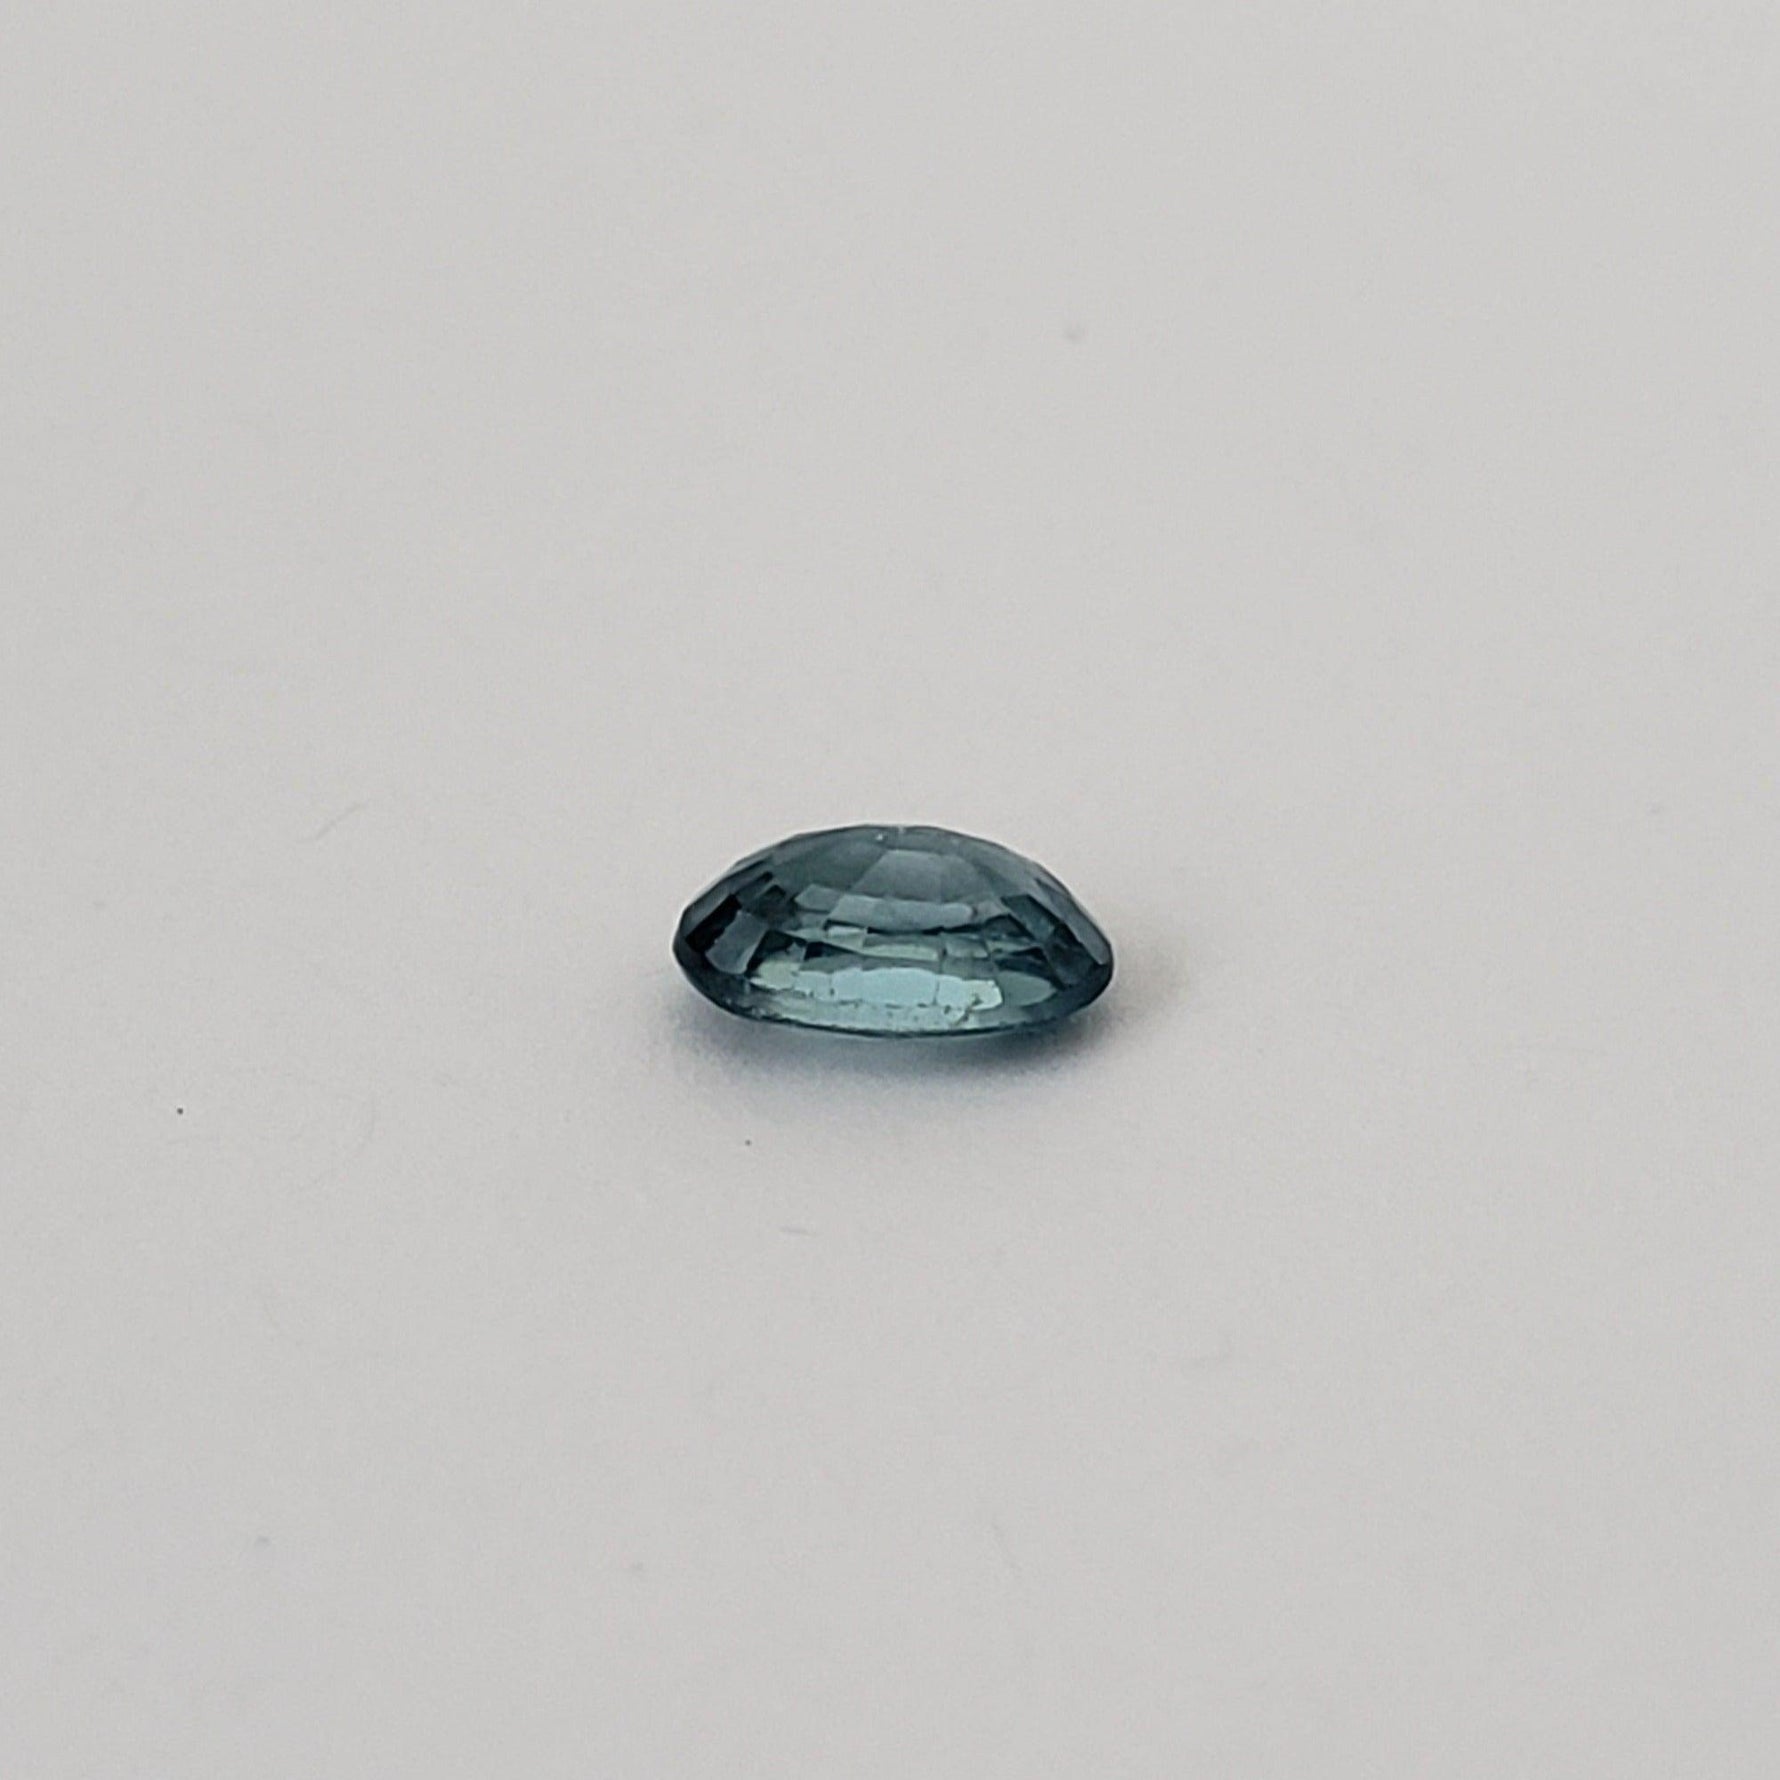 Zircon | Oval Cut | Blue | 6x4mm 0.83ct | Cambodia